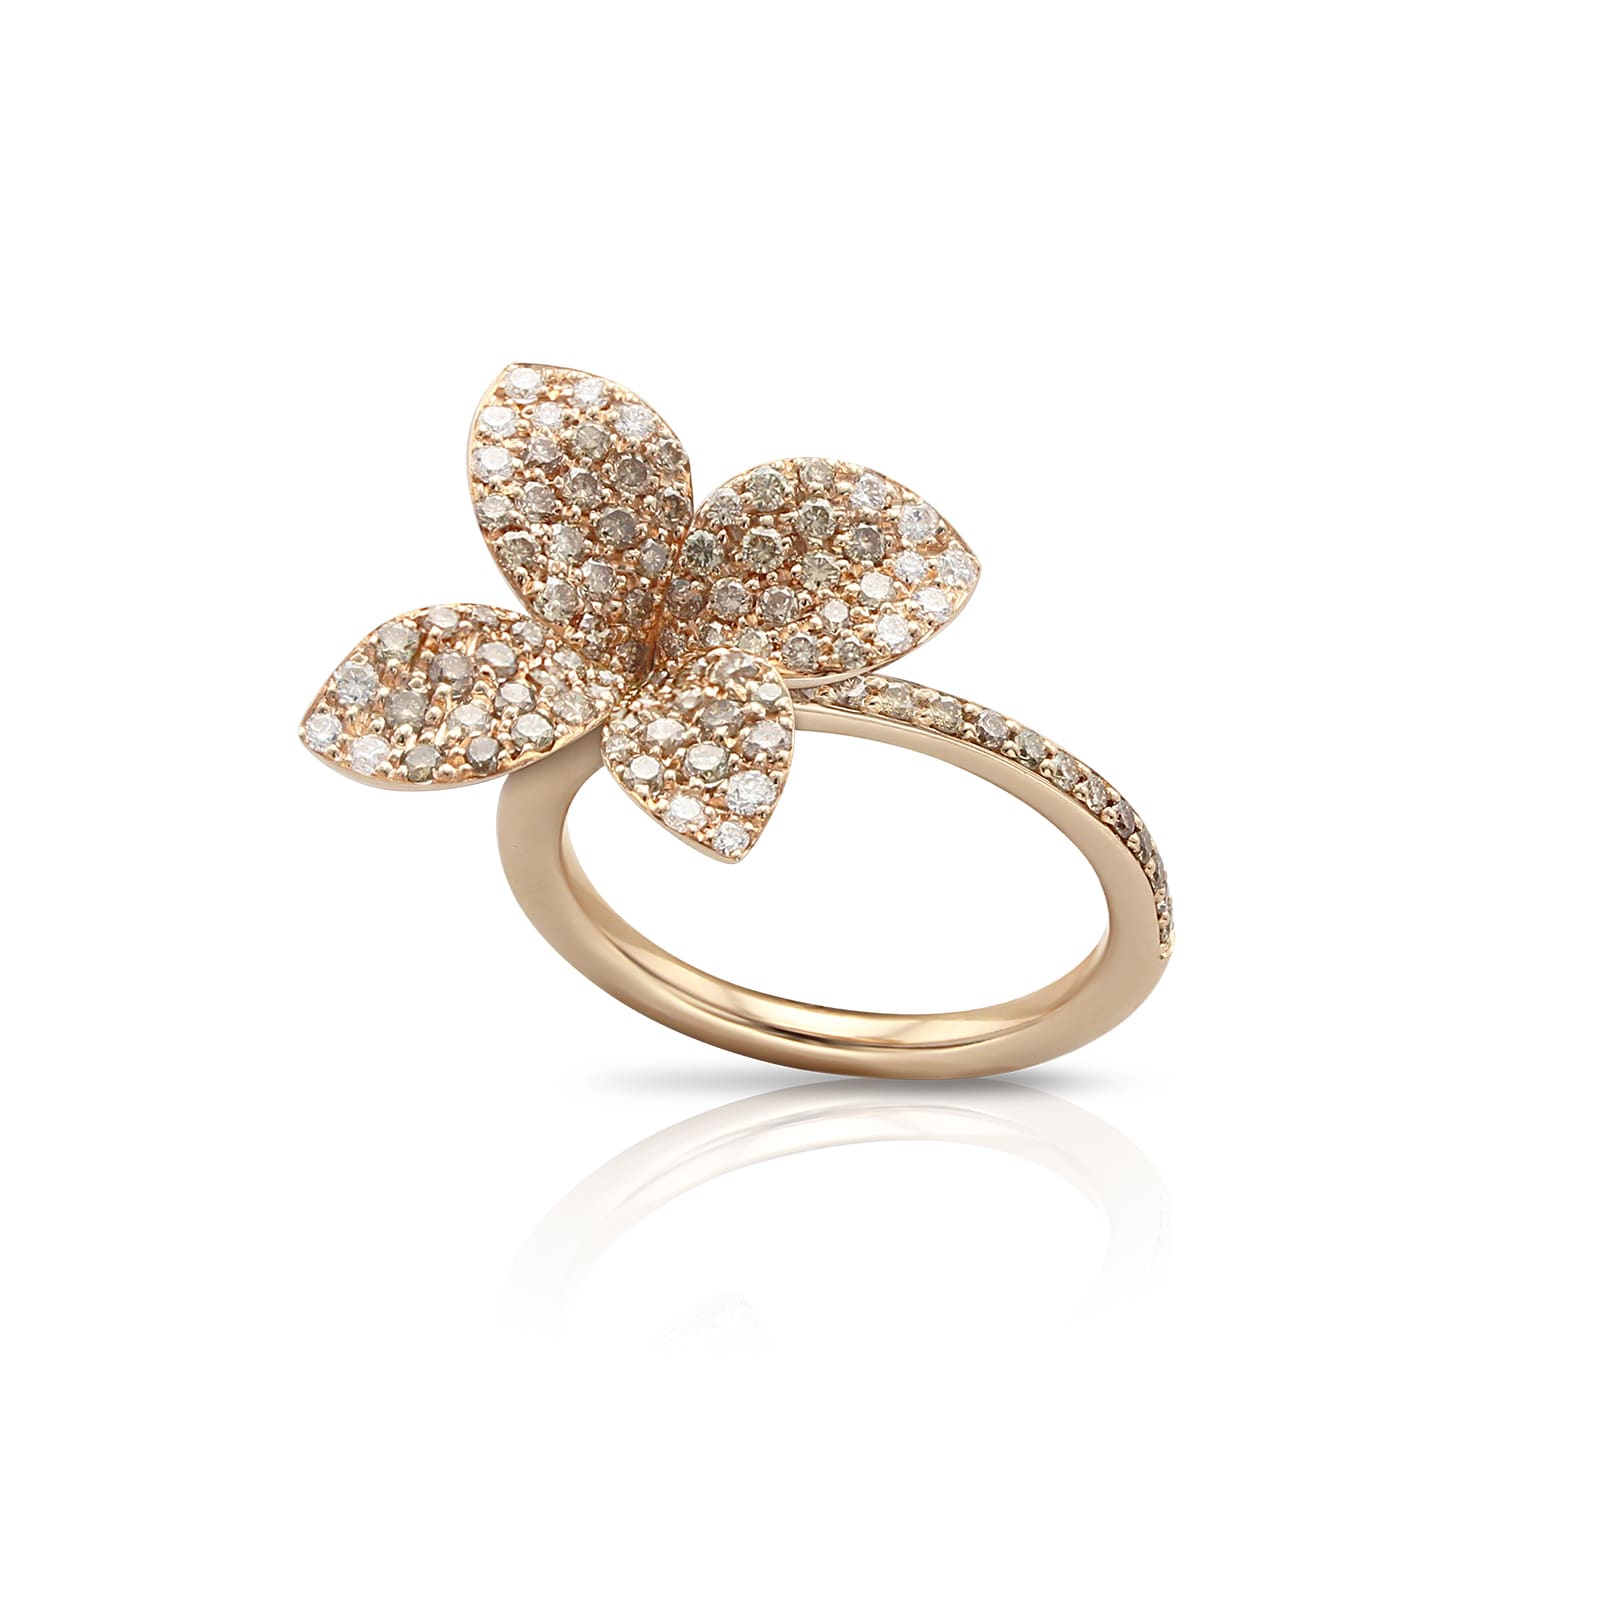 Petit Garden Medium Flower Ring in 18ct Rose Gold with Diamonds - Ring Size L